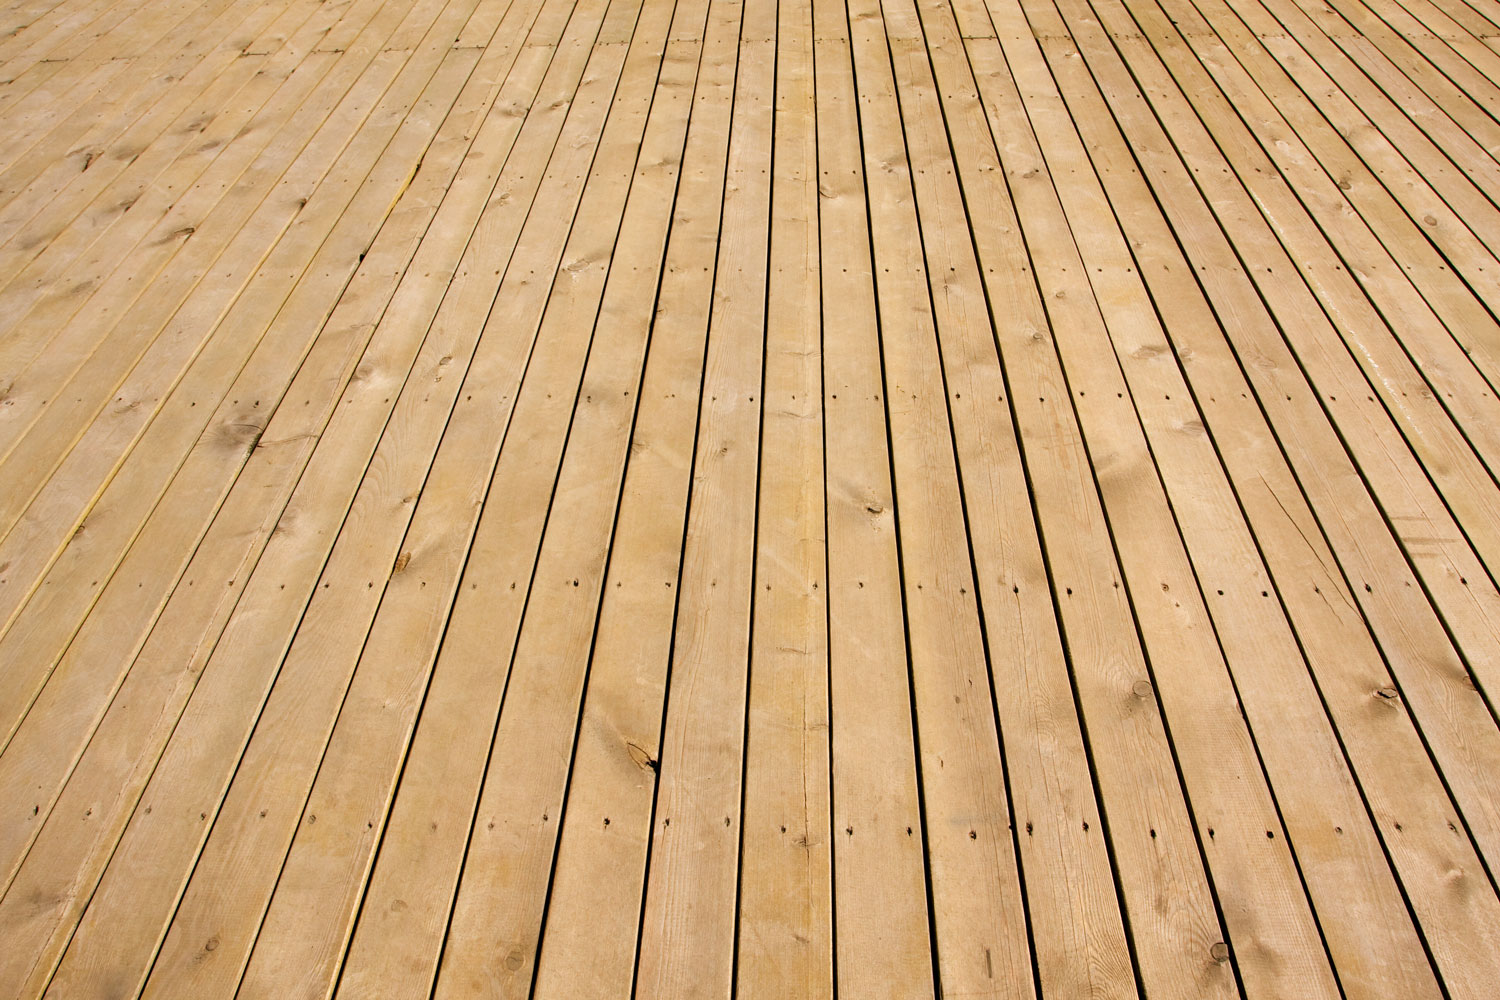 Gapped wooden flooring